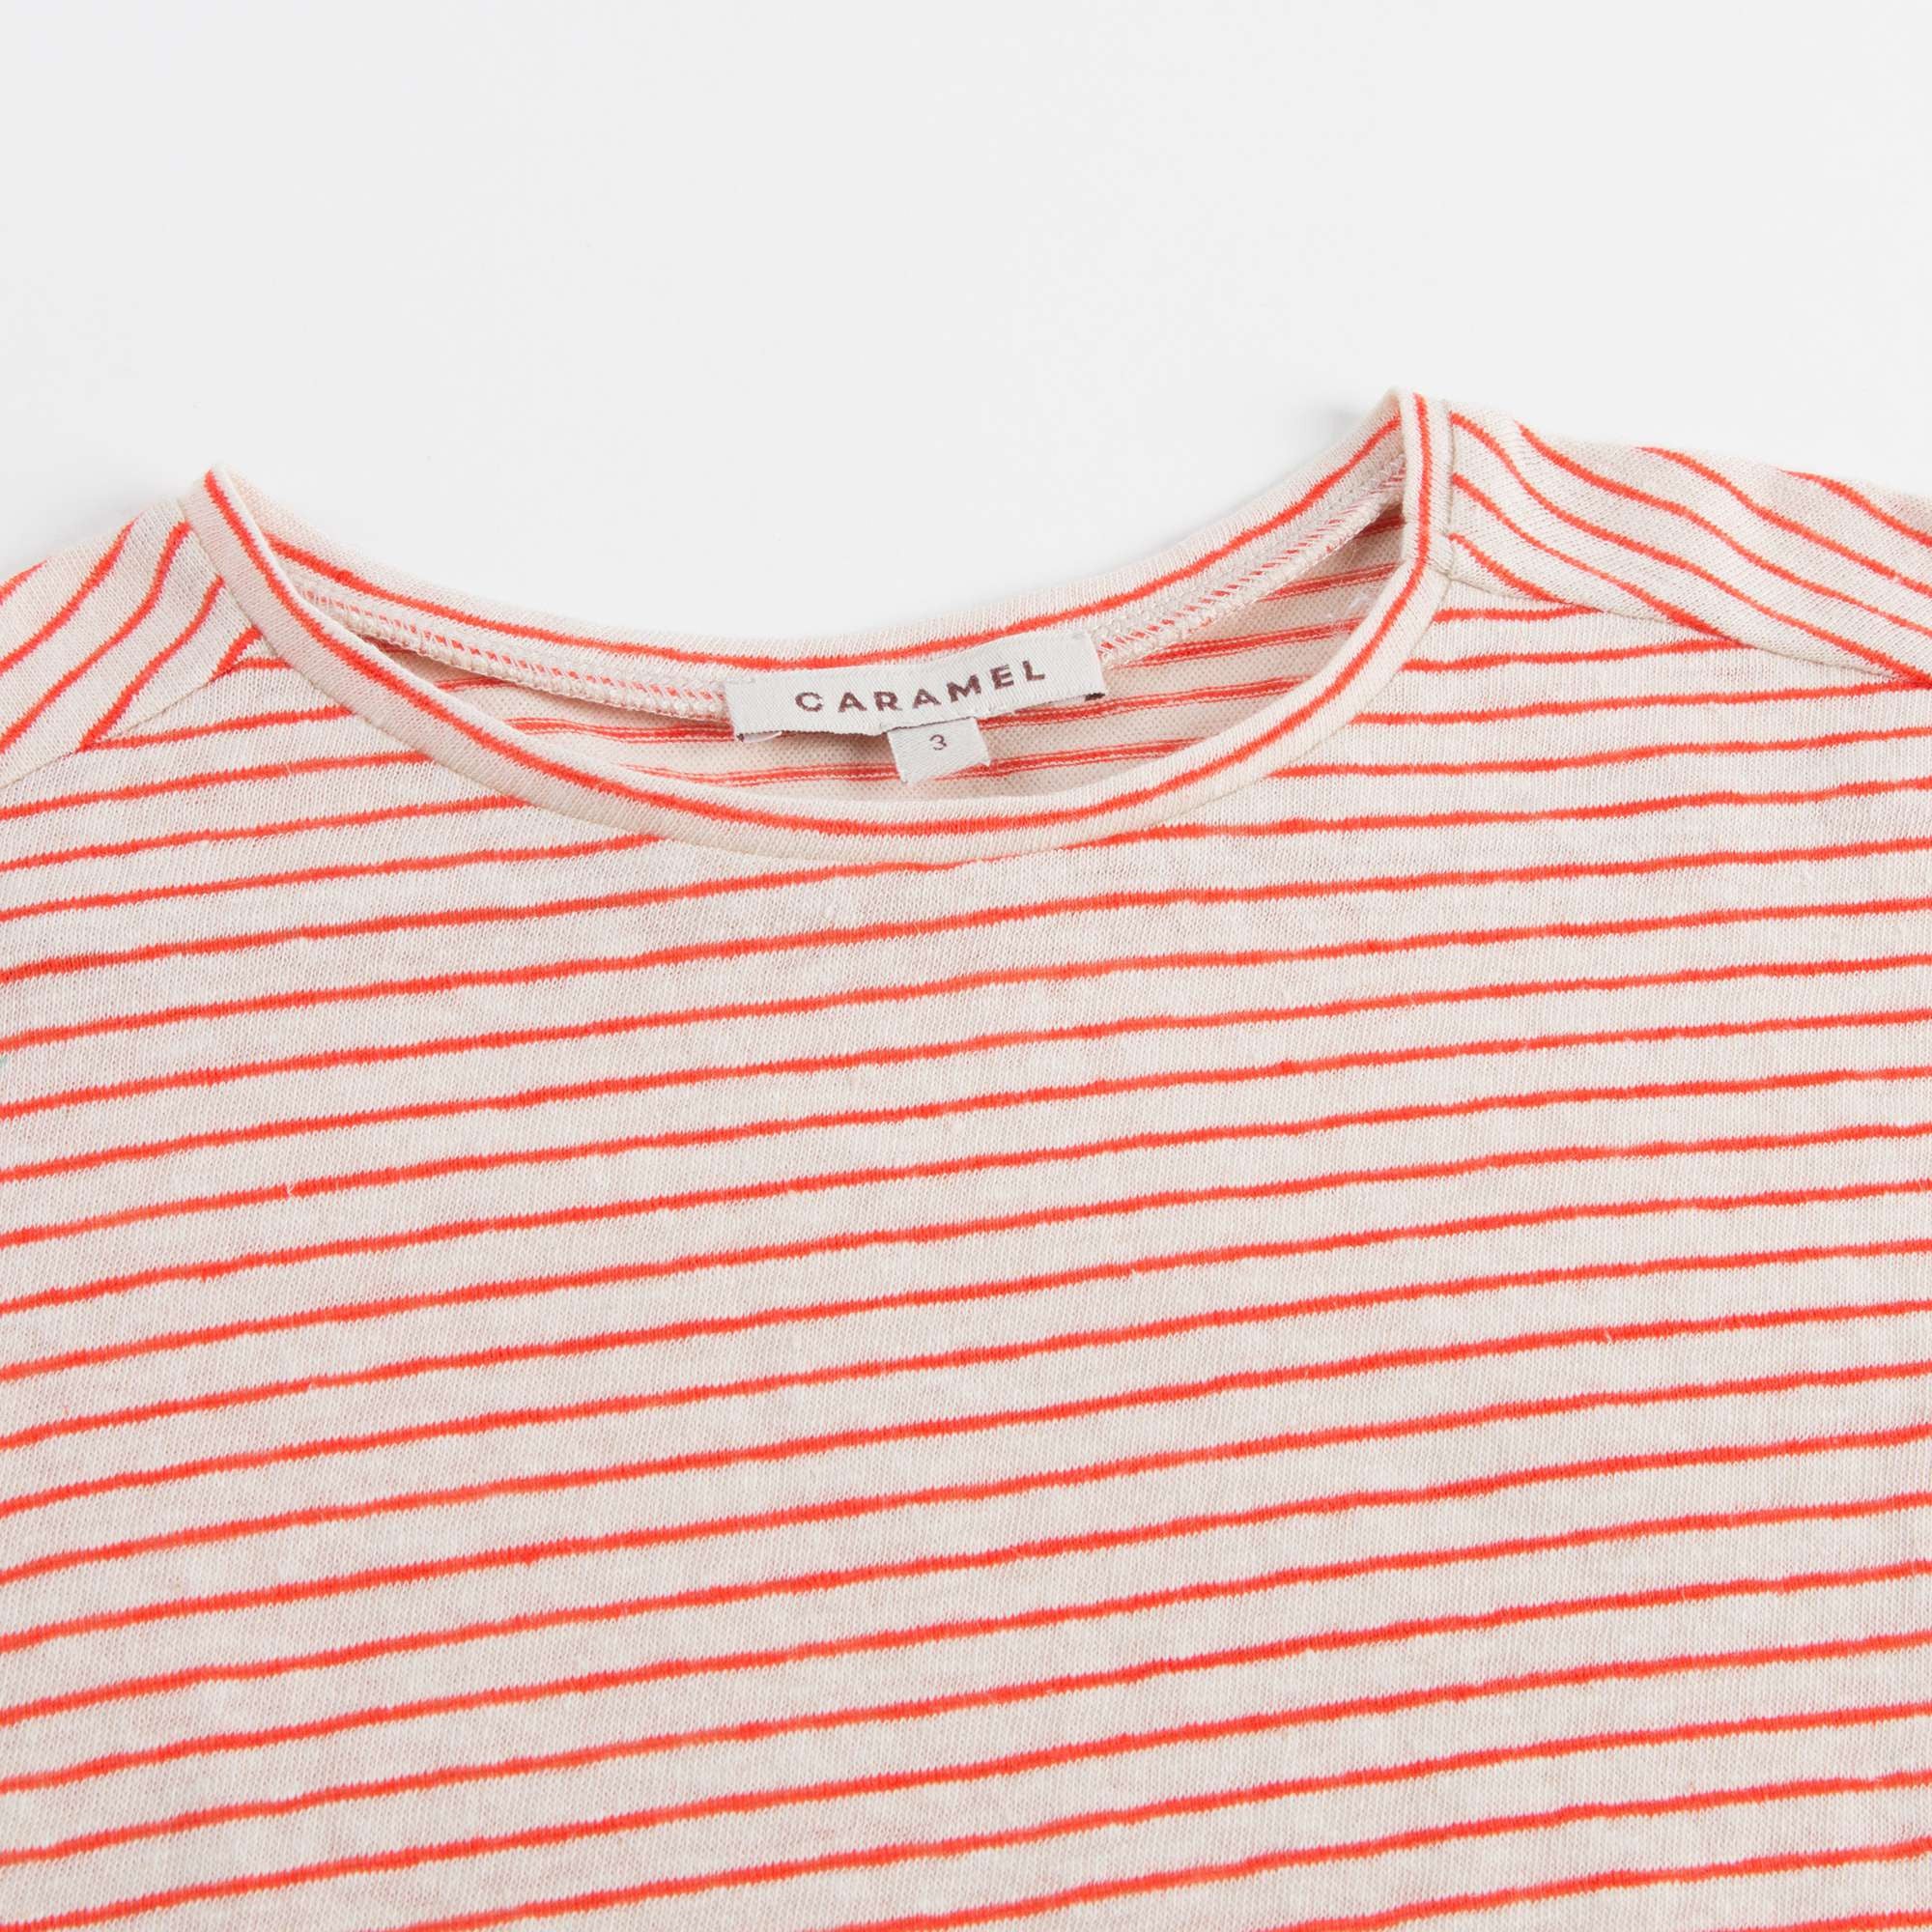 Girls Bright Orange Striped T-shirt